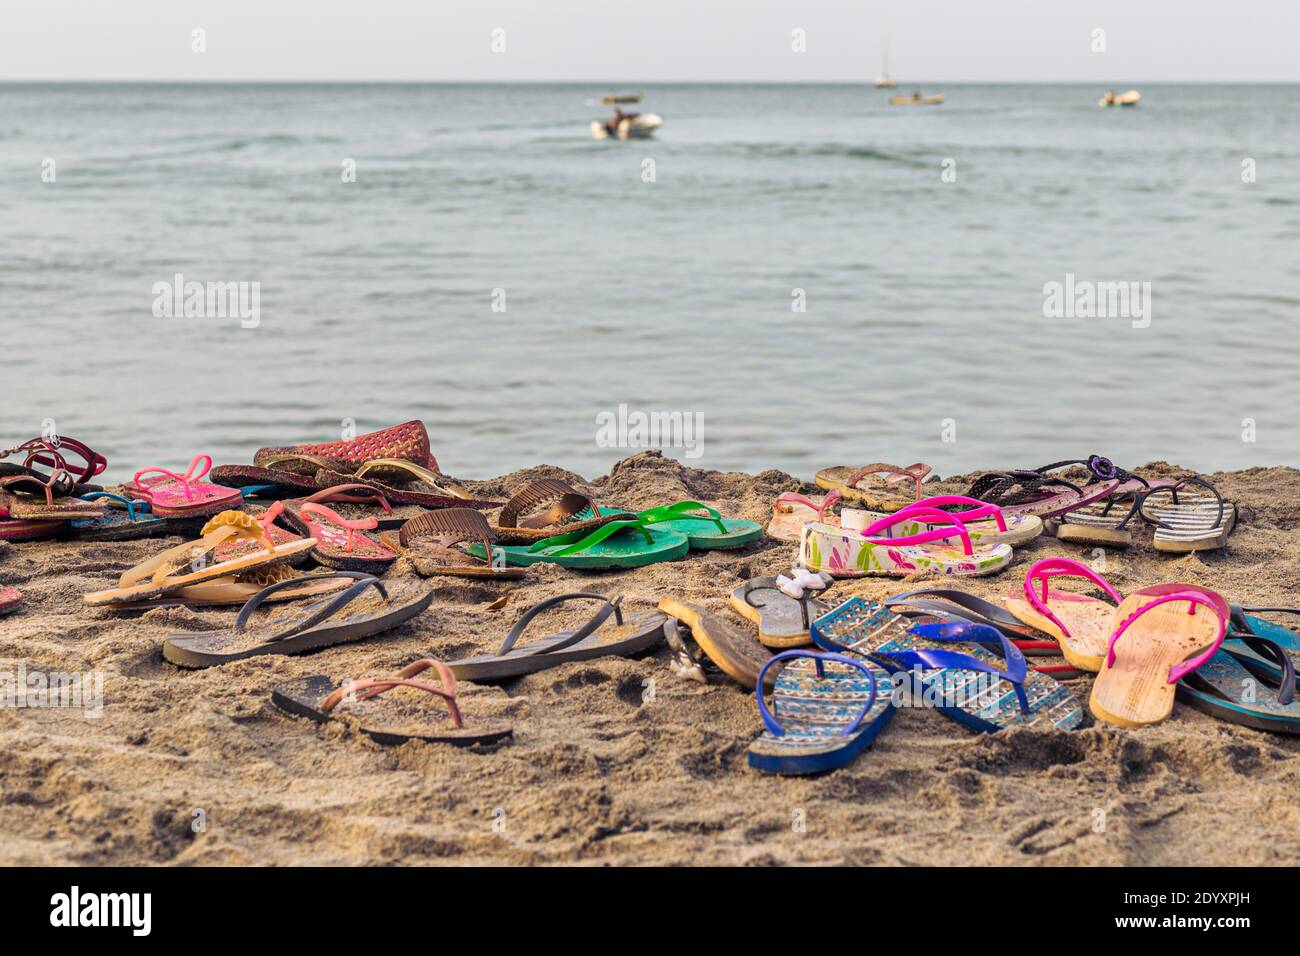 Flip-flops left in the sand at a beach in Sri Lanka Stock Photo